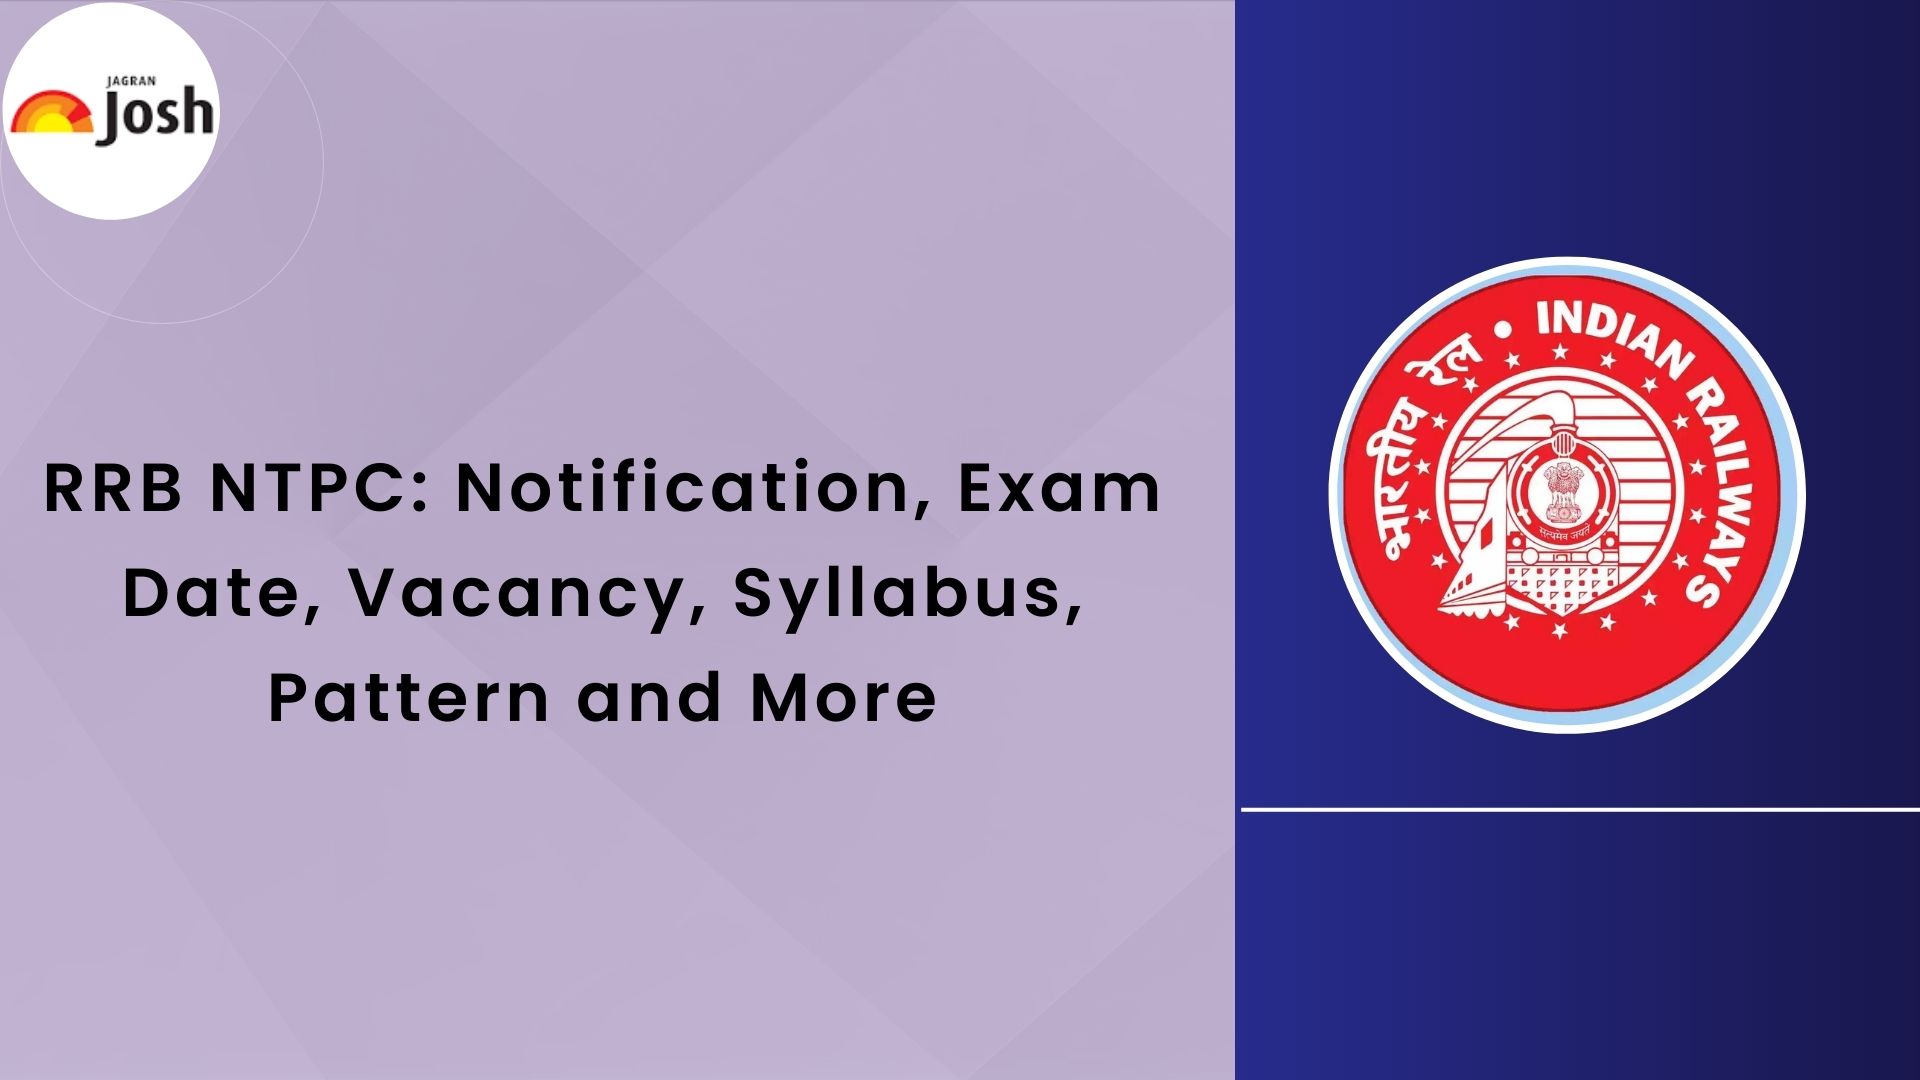 RRB NTPC 2023 Notification Exam Date Application Form Vacancy Eligibility Jagran Josh